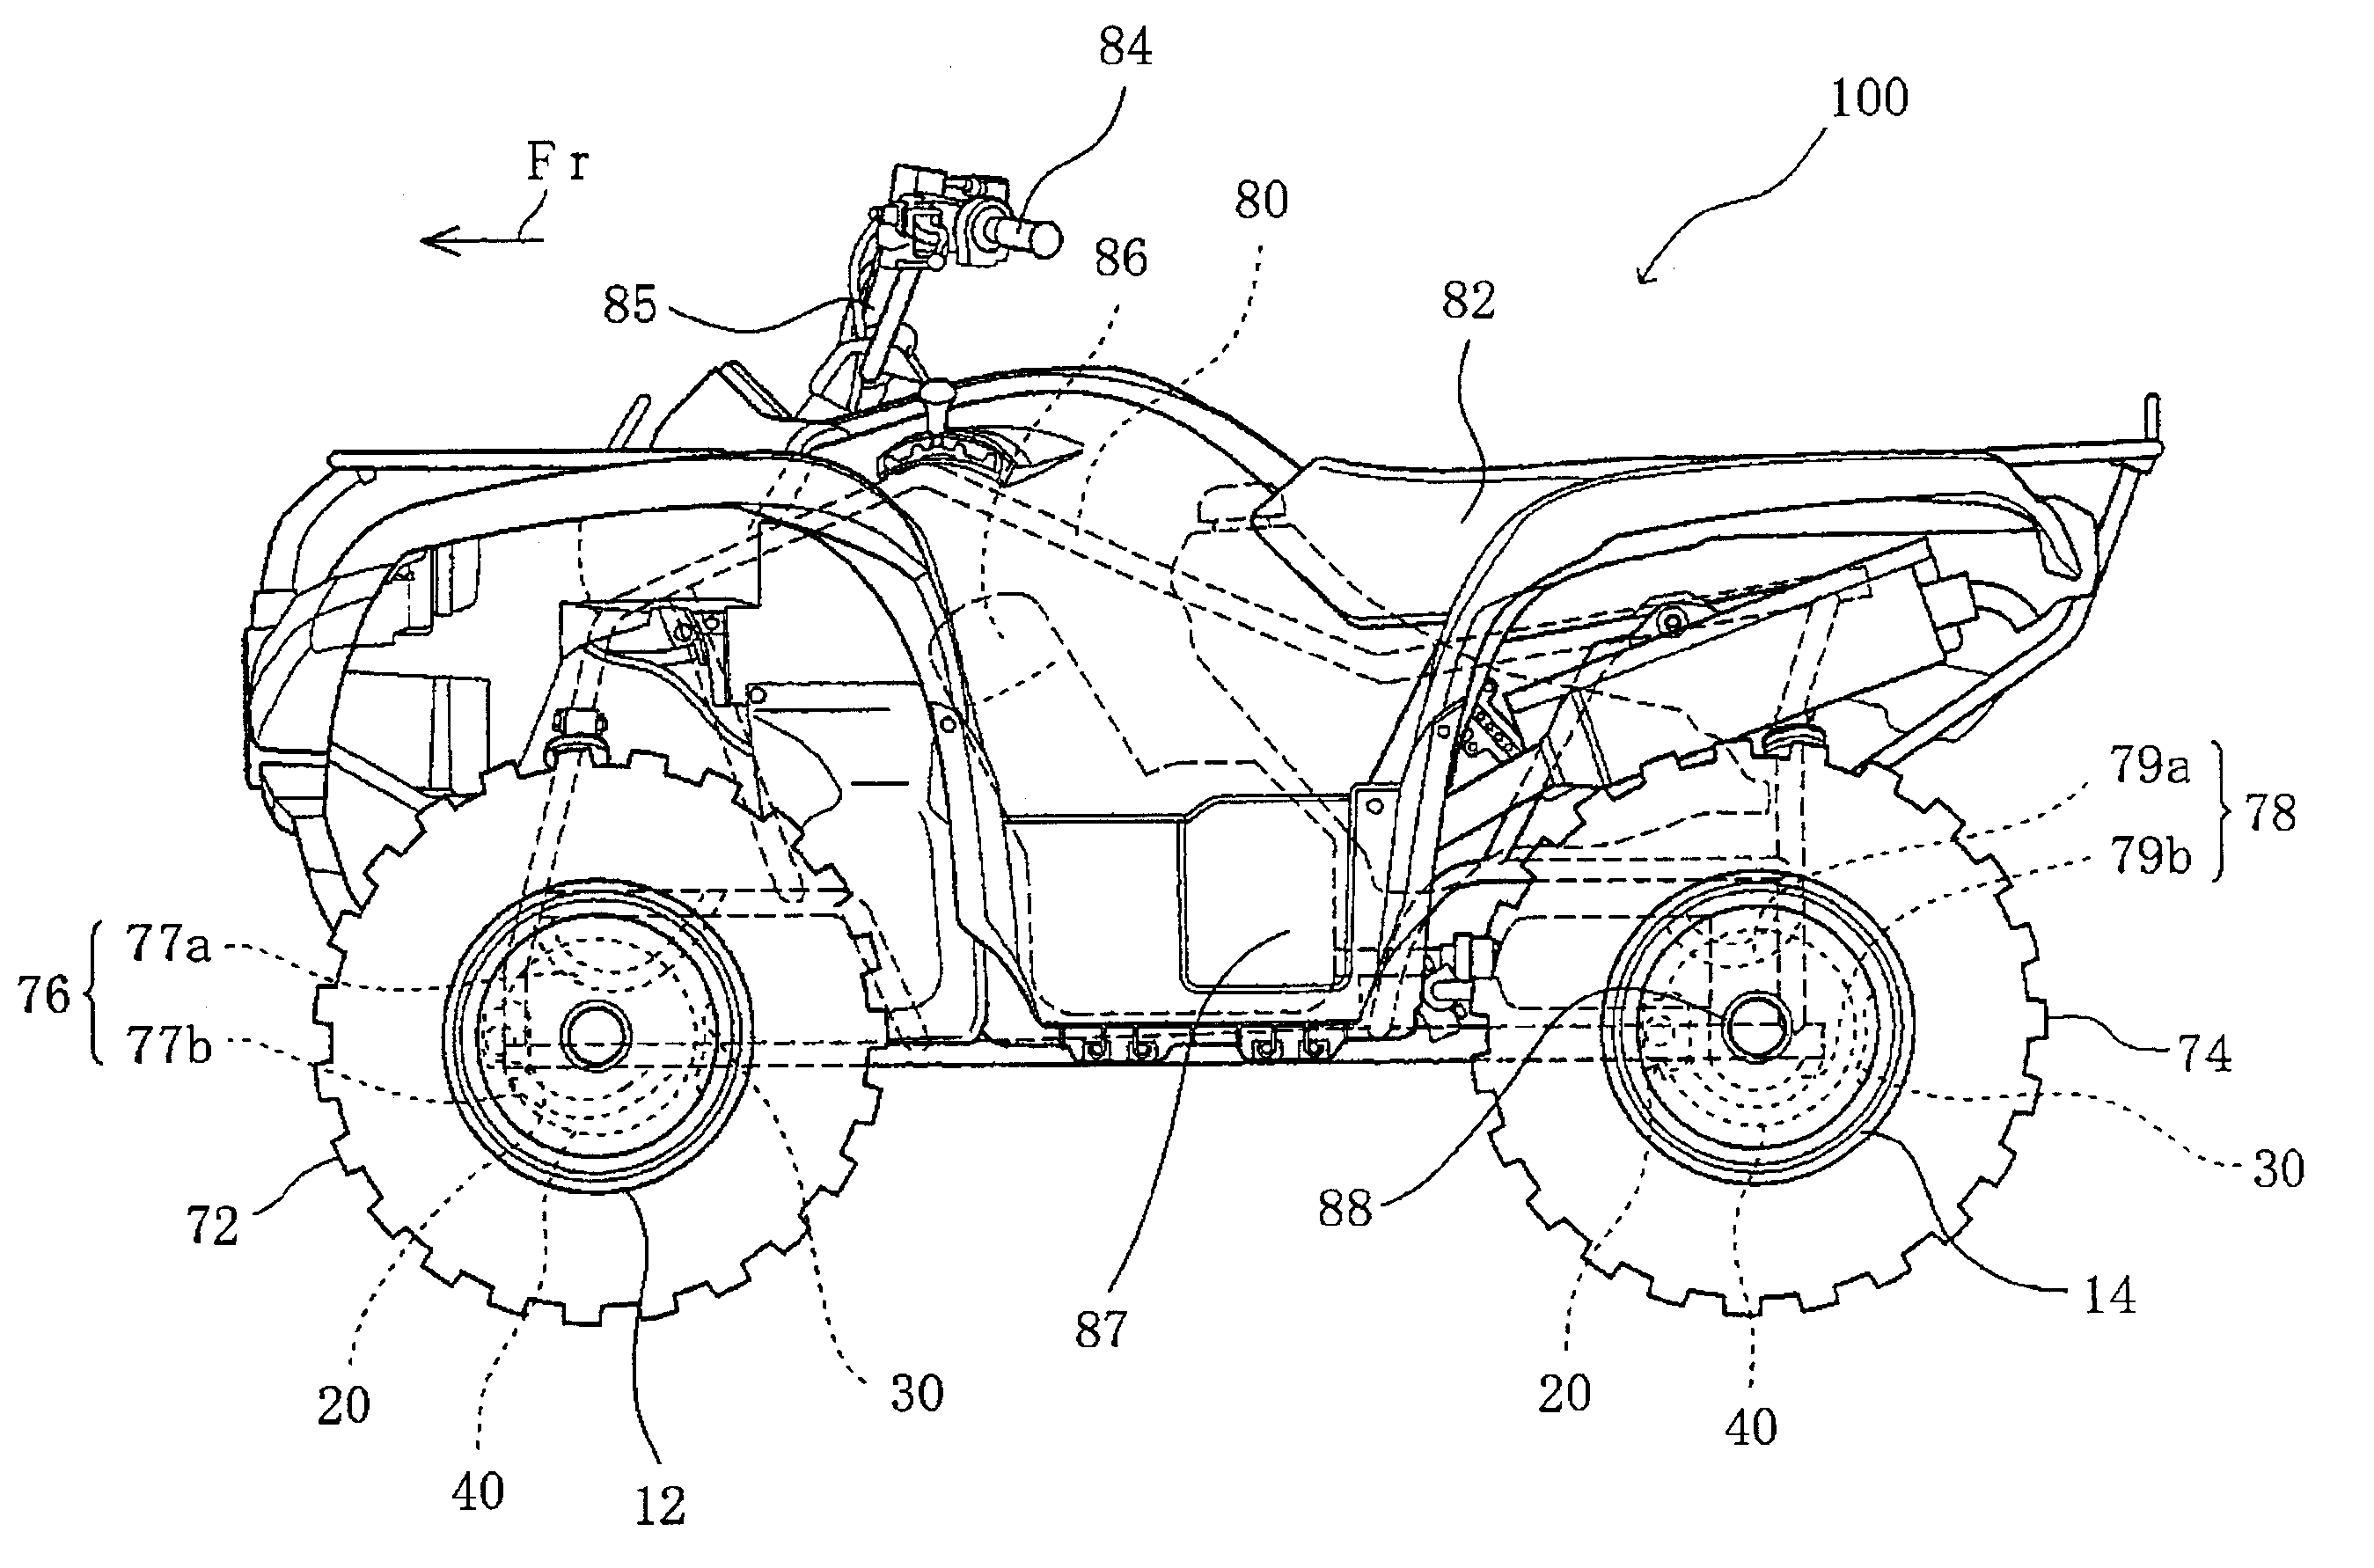 All-terrain vehicle